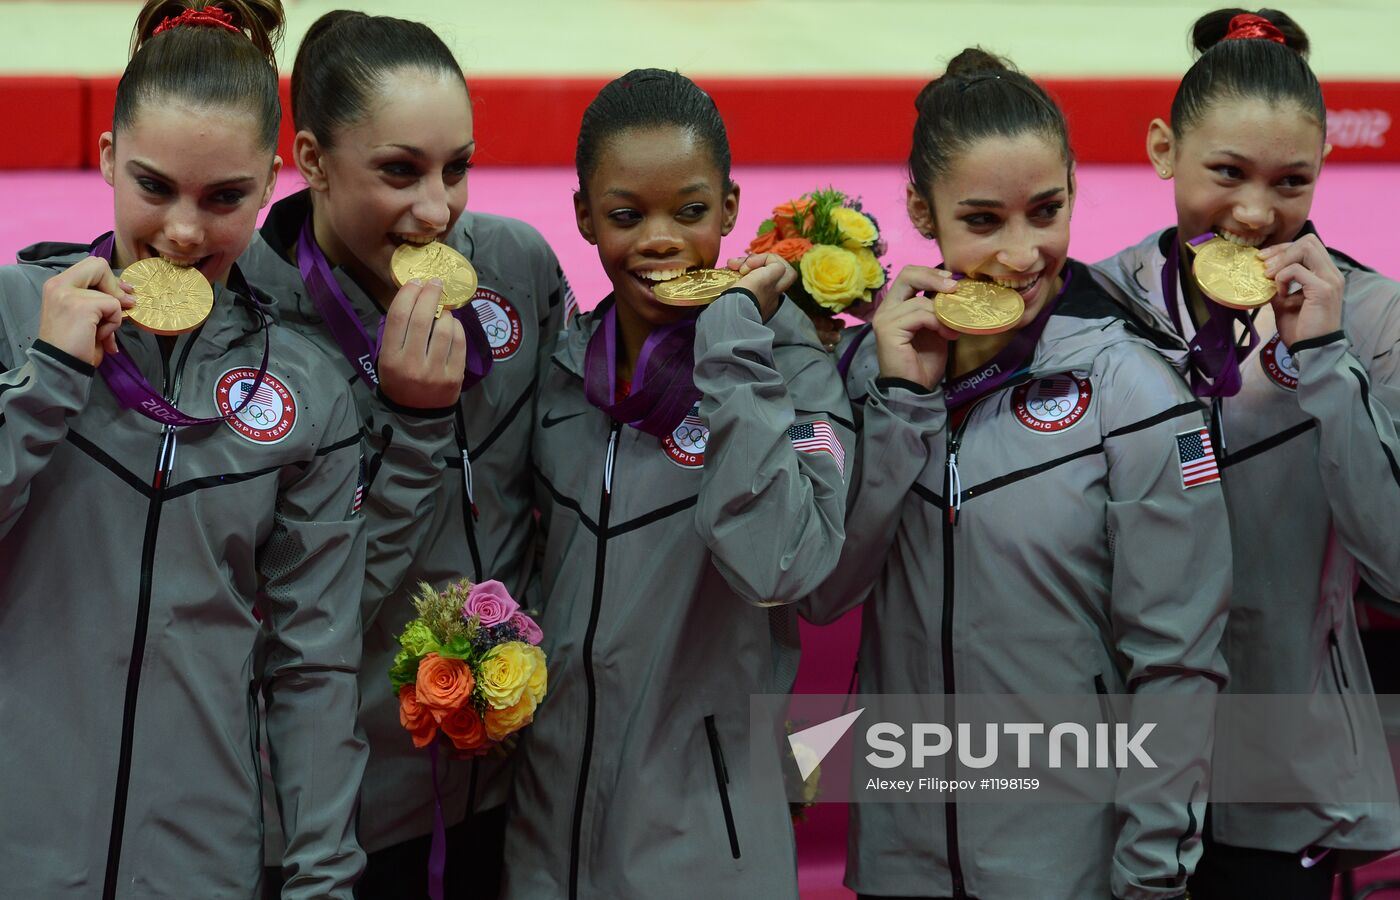 2012 Olympics. Women's Team Gymnastics Finals